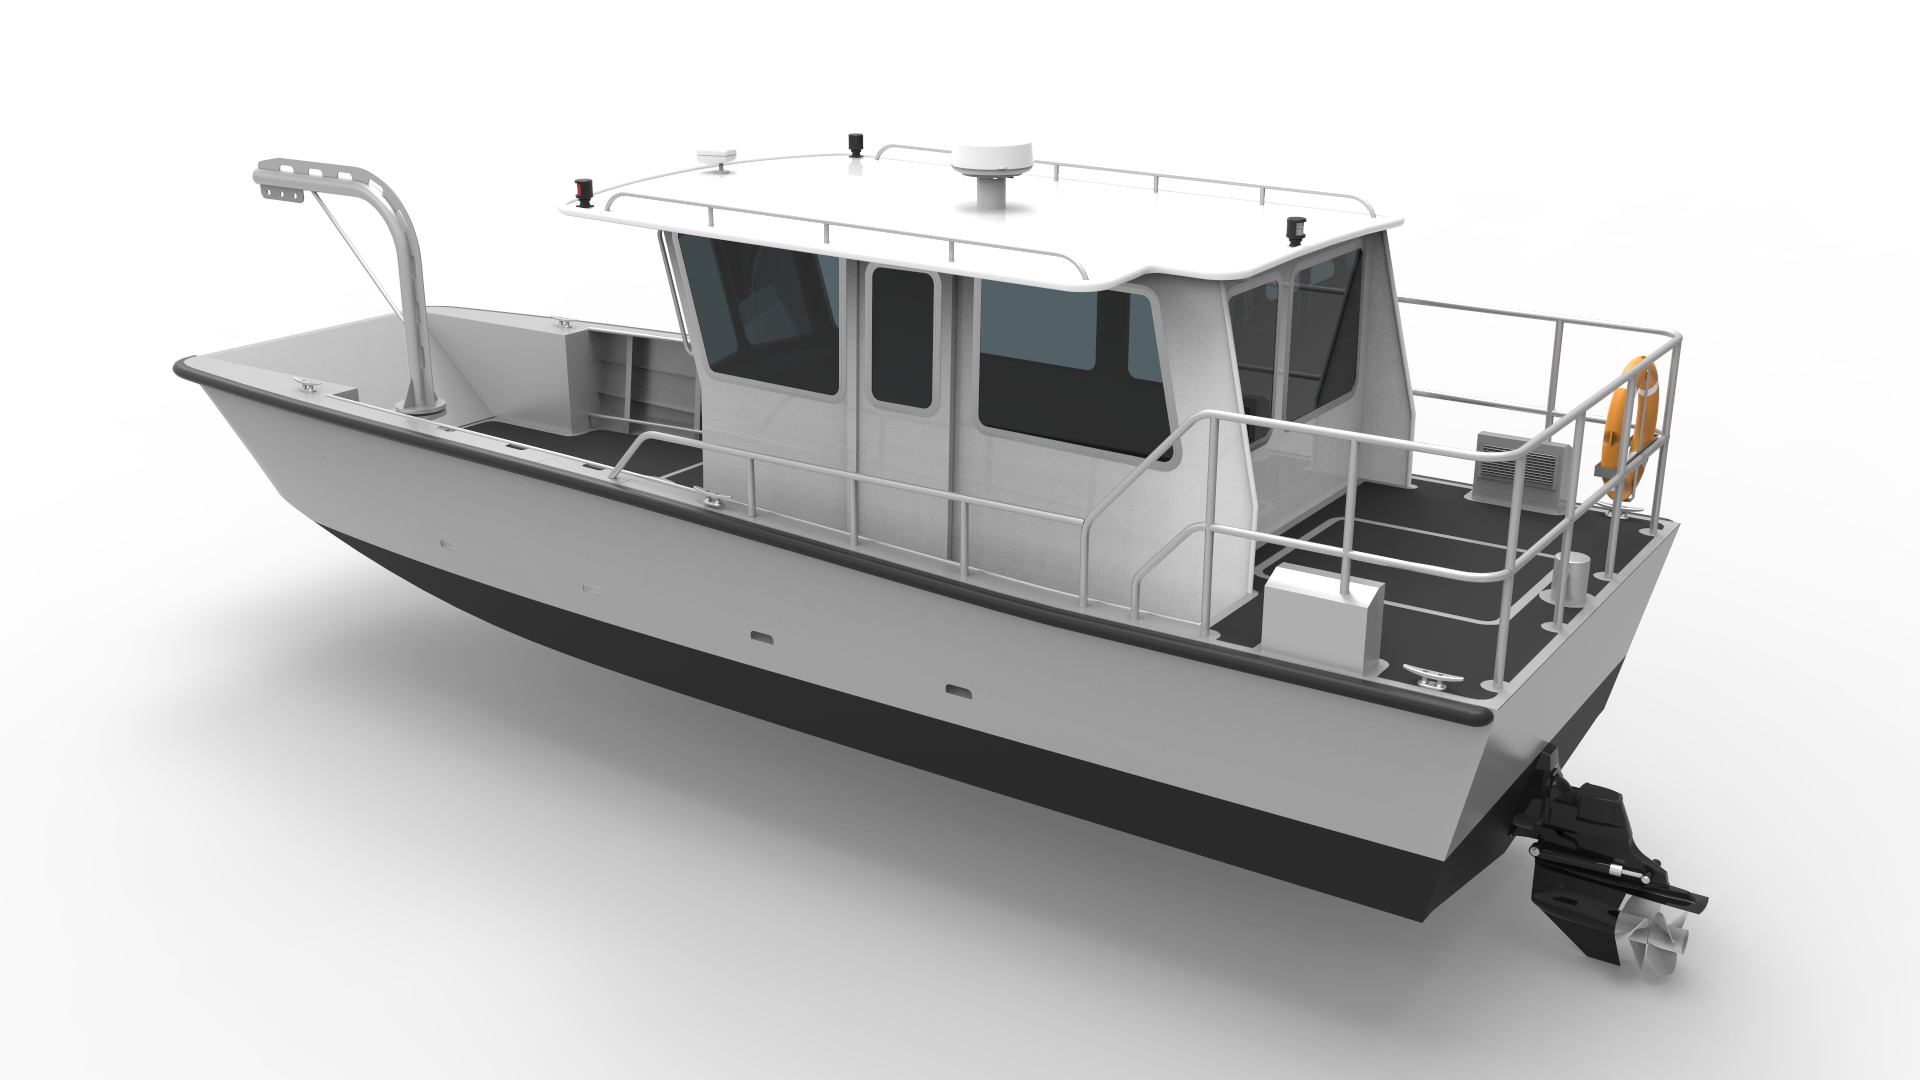 Metal Boat Kits | Premium CNC boat kits in Aluminum Alloy 